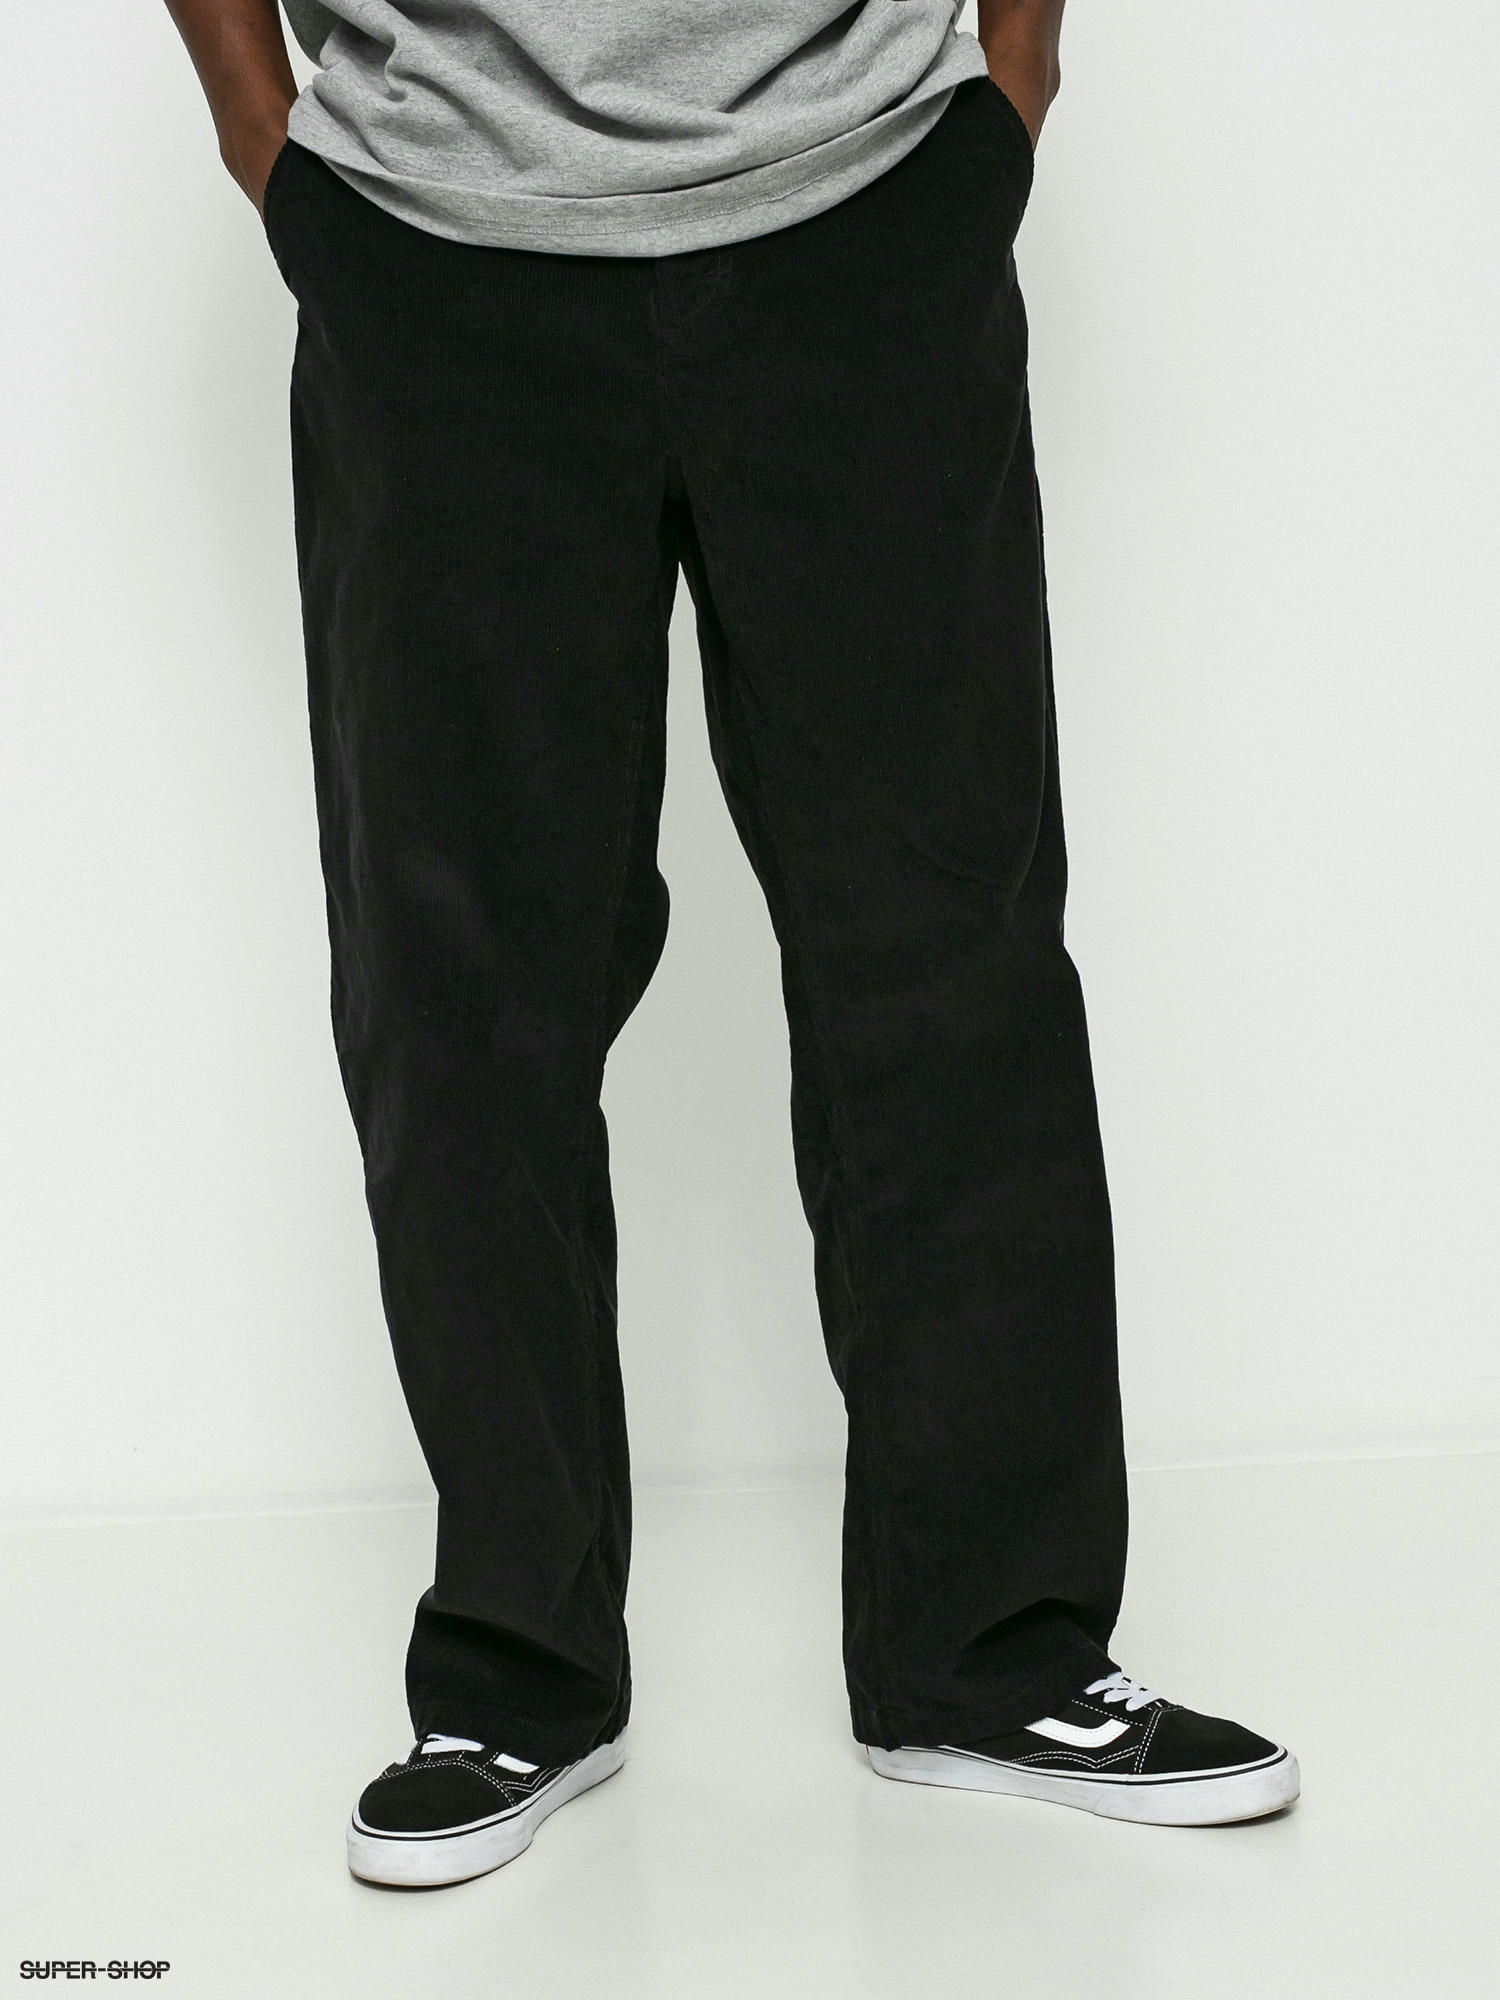 Polar Skate 44 Cord Pants (black)